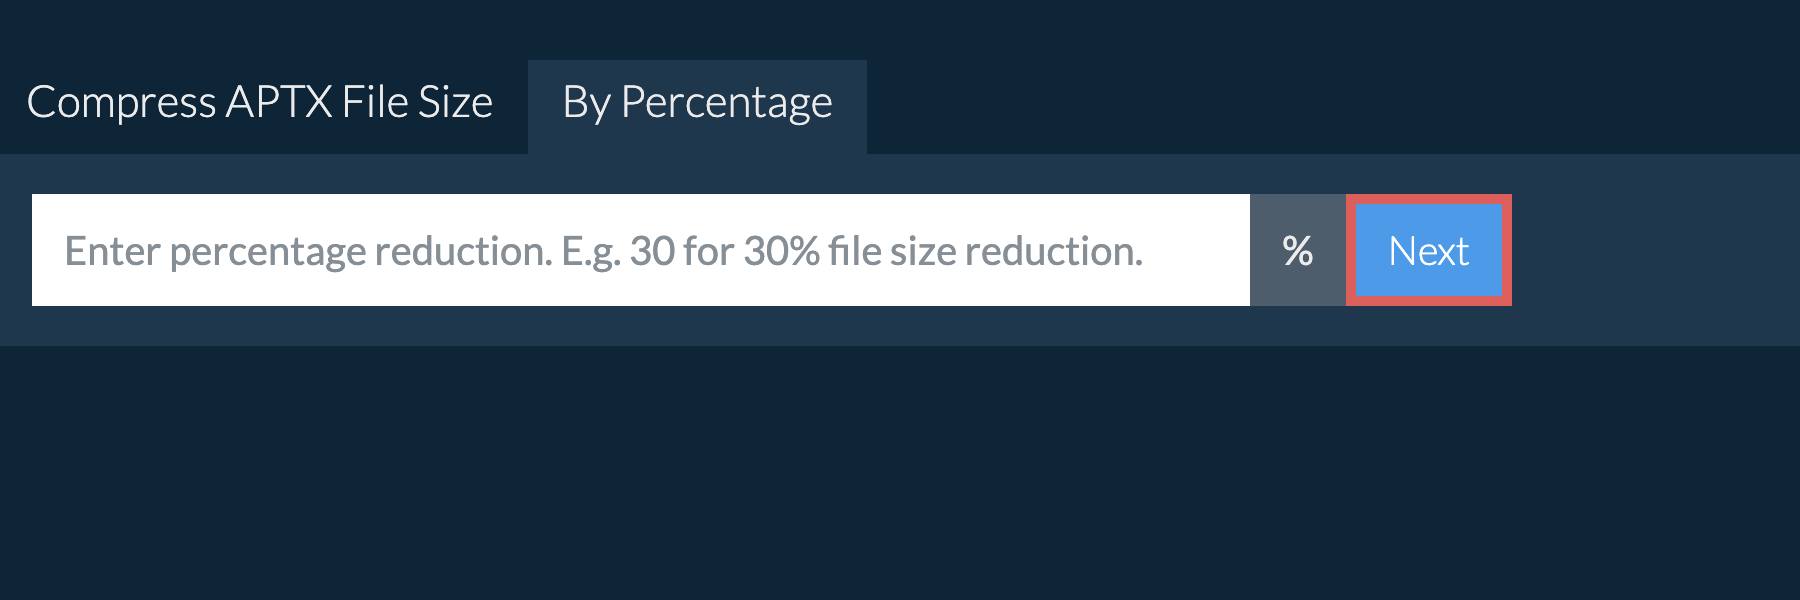 Reduce aptx By Percentage